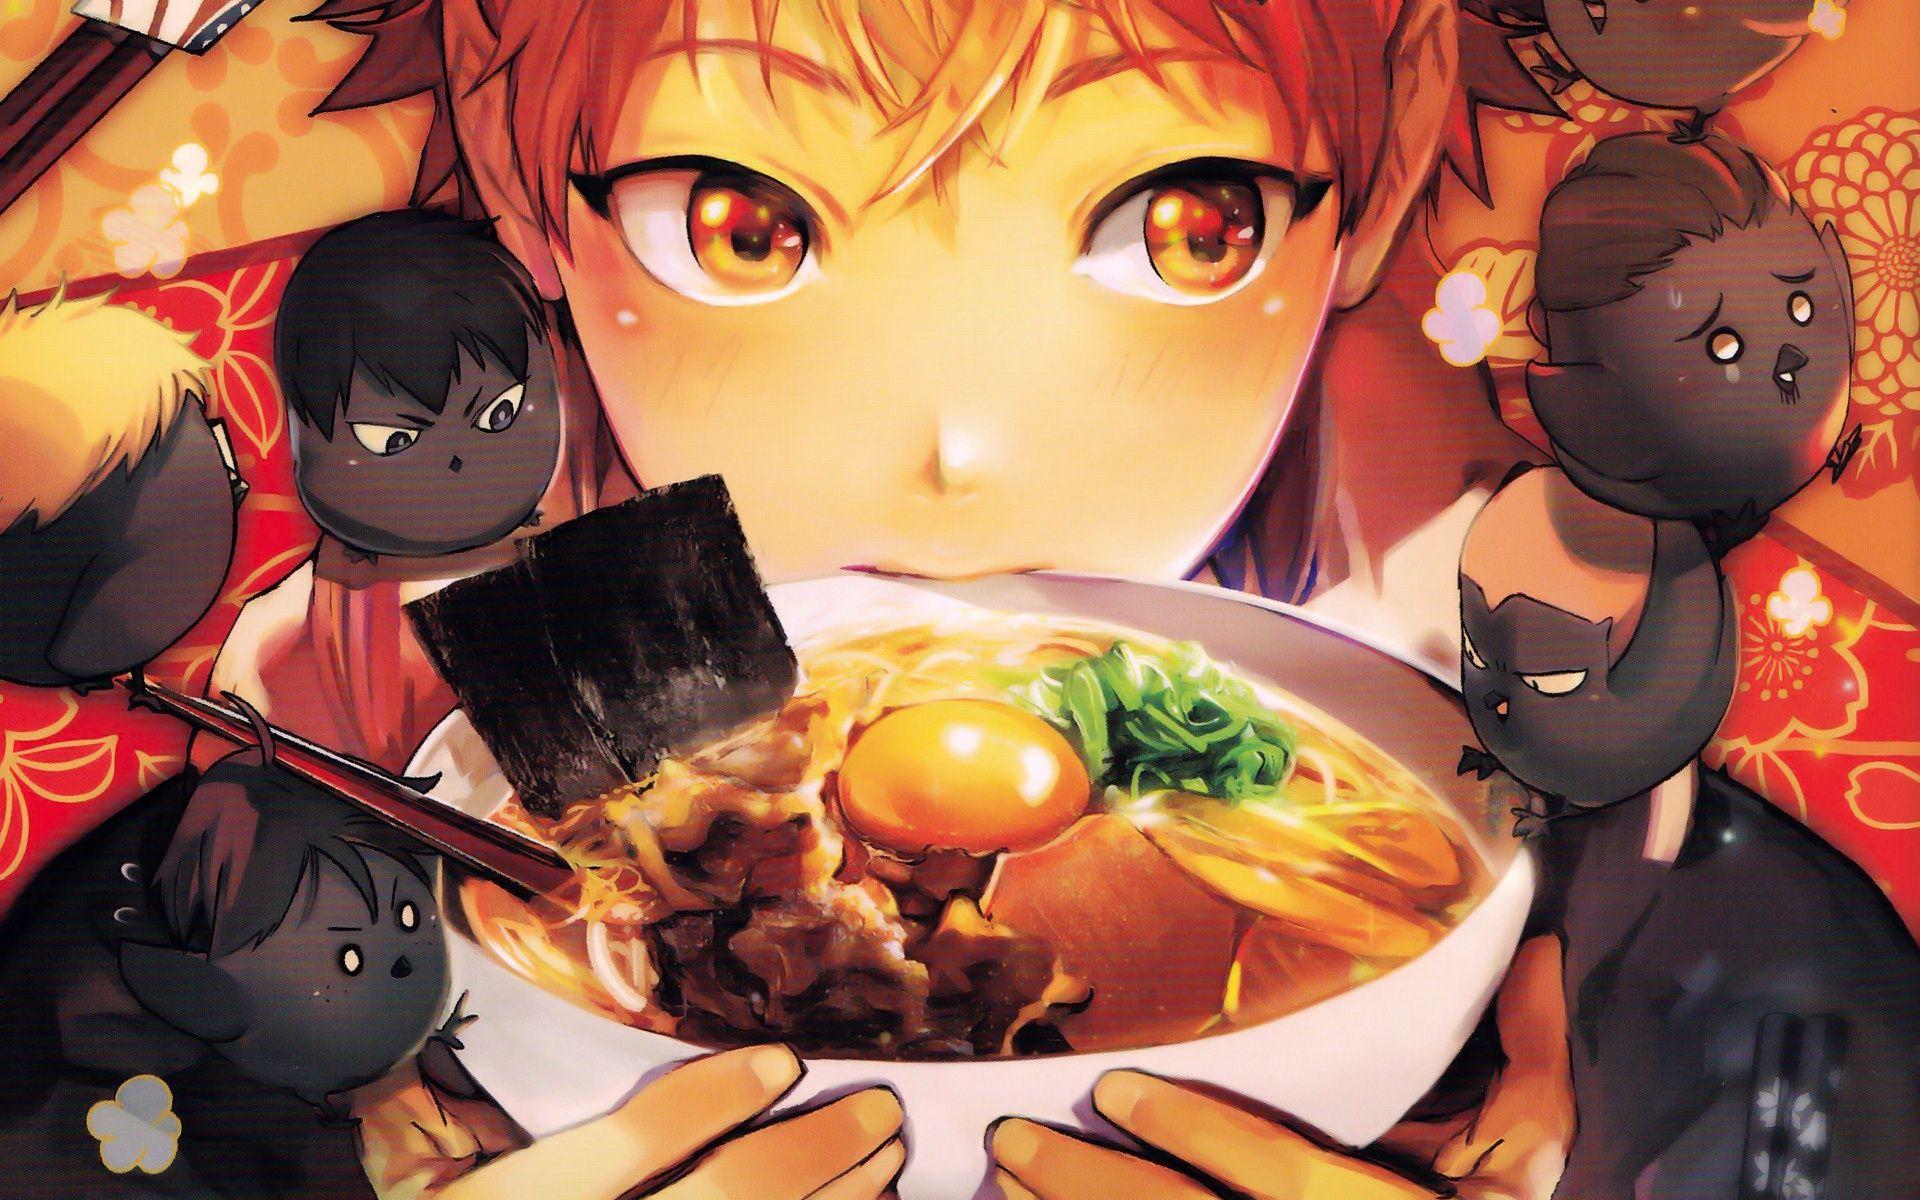 Download miễn phí 500 Anime restaurant background Full HD chất lượng cao